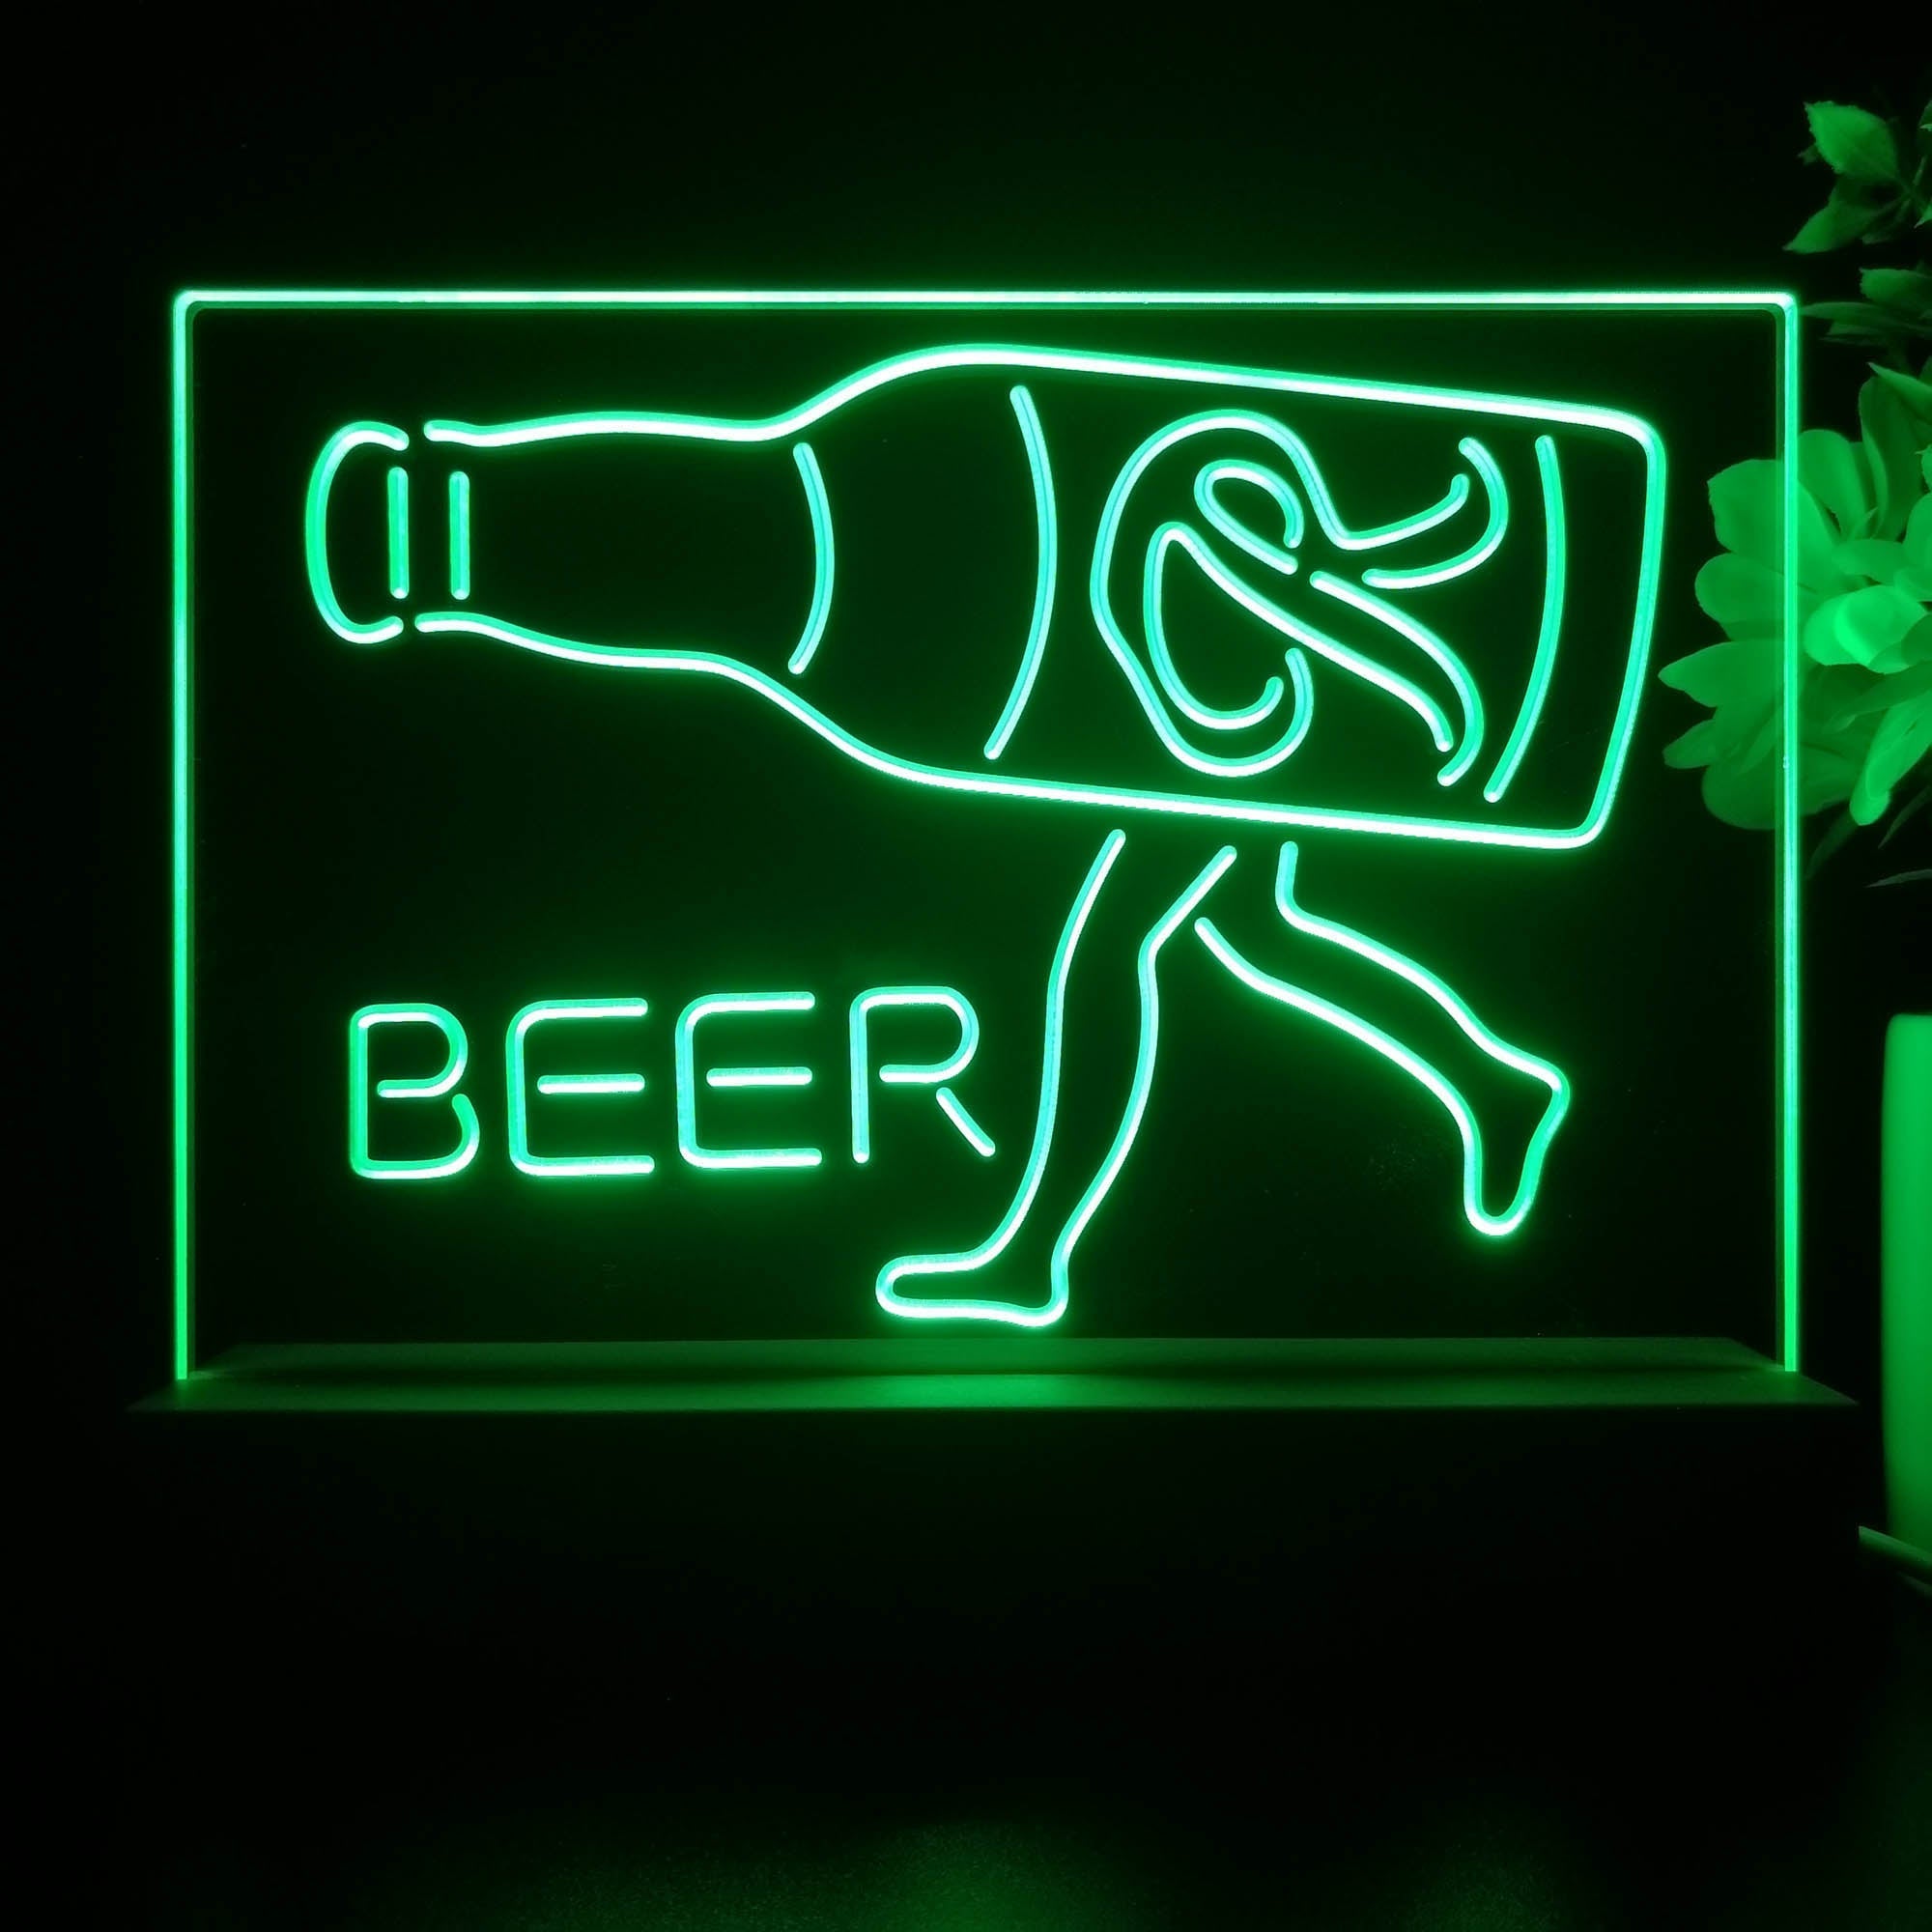 Rainier Beer Garage Man Cave Bar Neon Sign Pub Bar Lamp